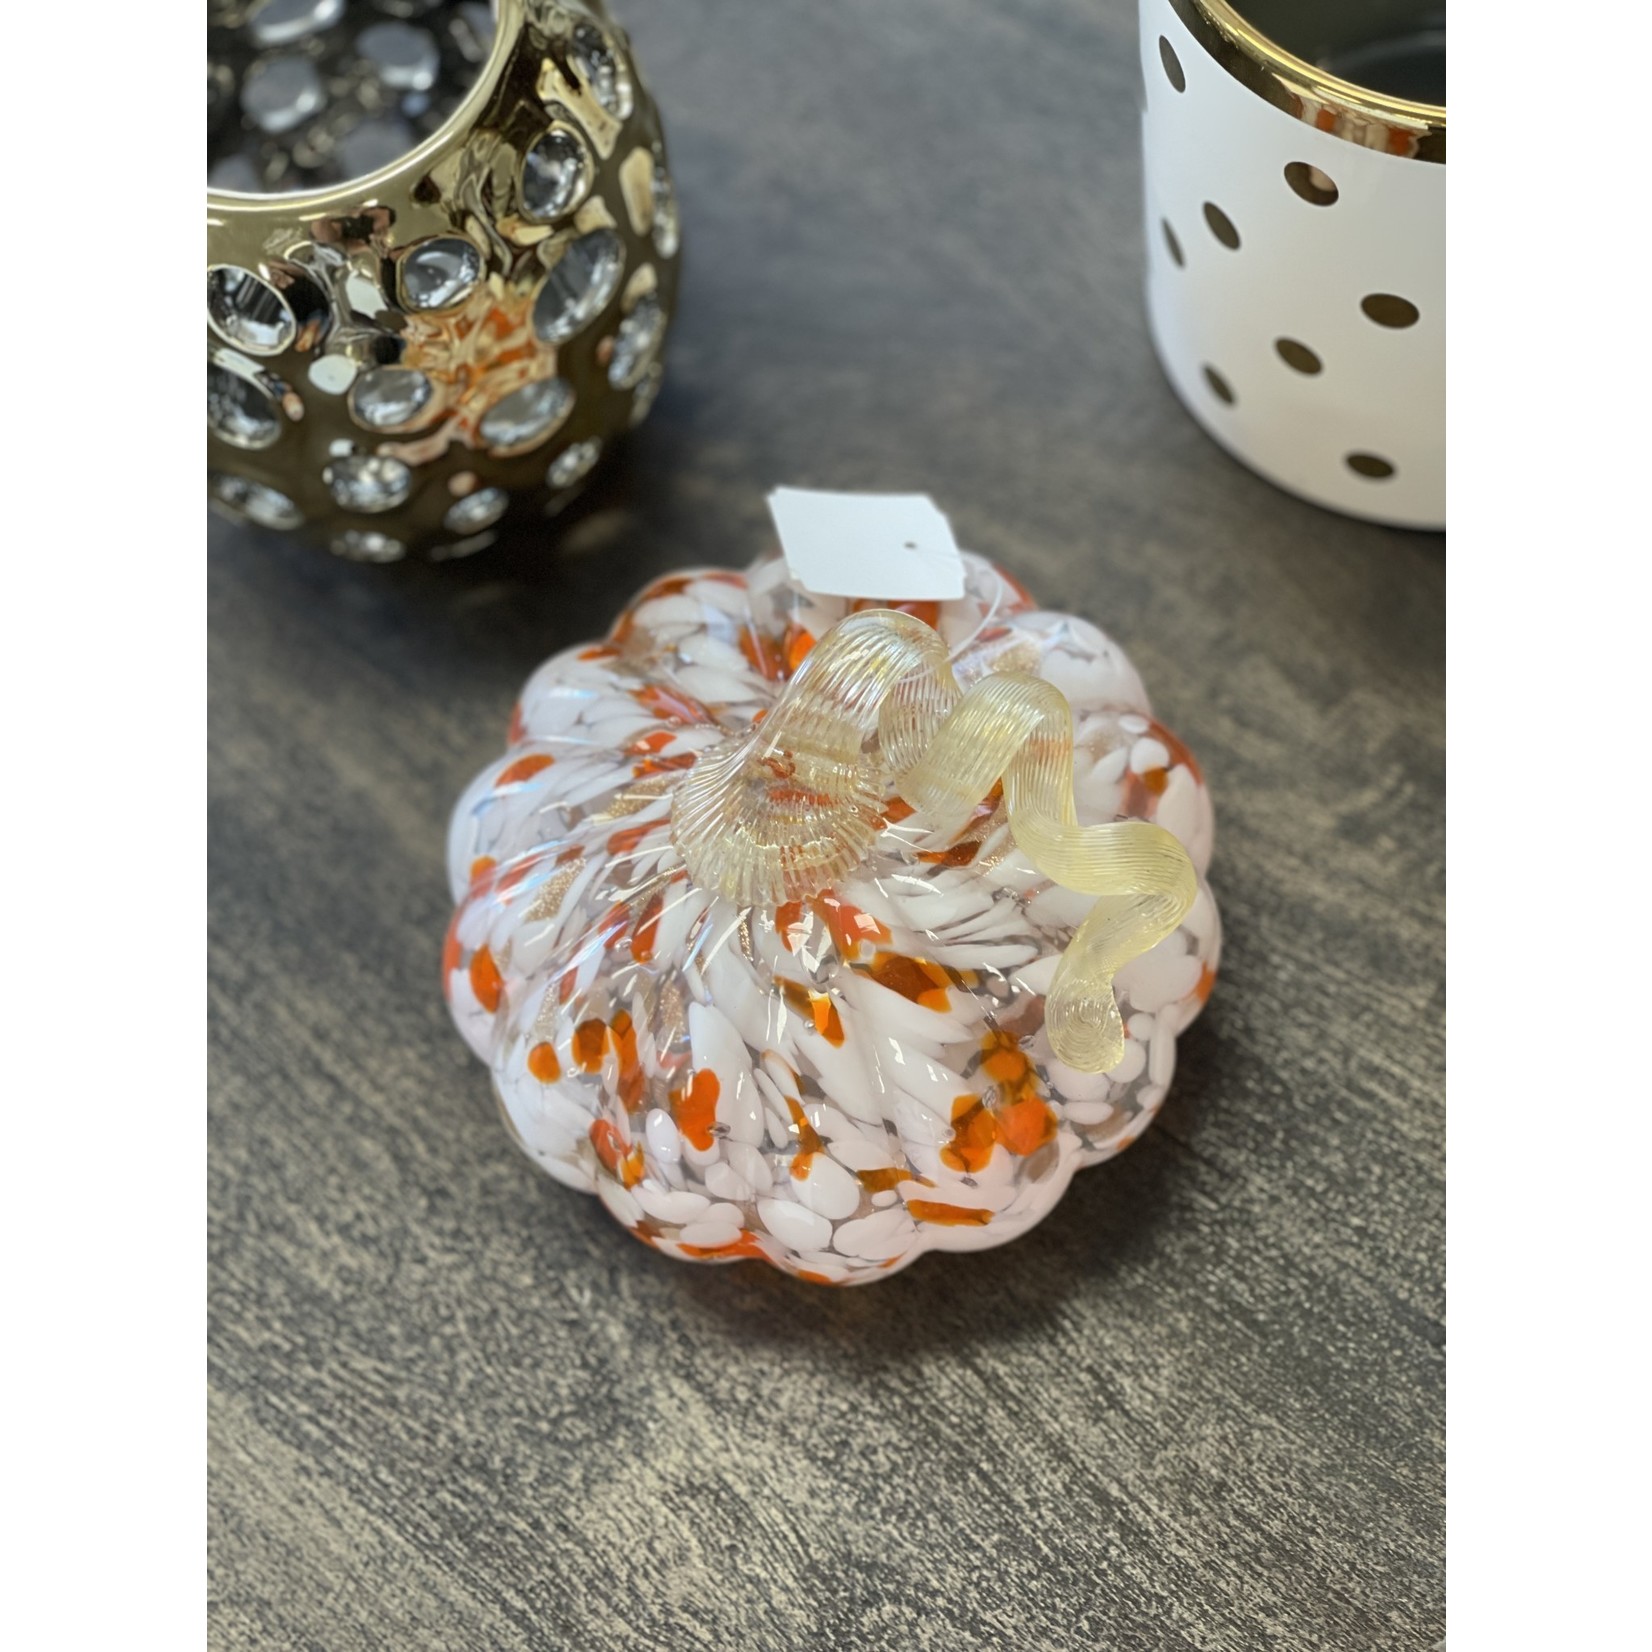 Taiwan Imports Glass Pumpkin/Gourd Orange & White